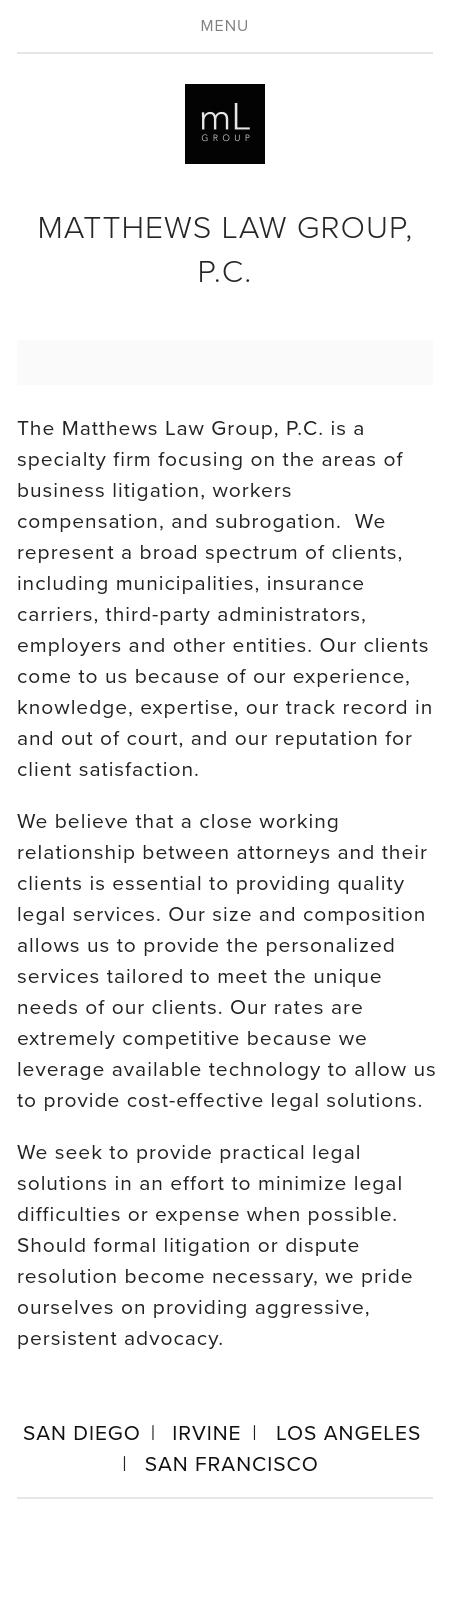 Matthews Law Group, P.C. - San Francisco CA Lawyers